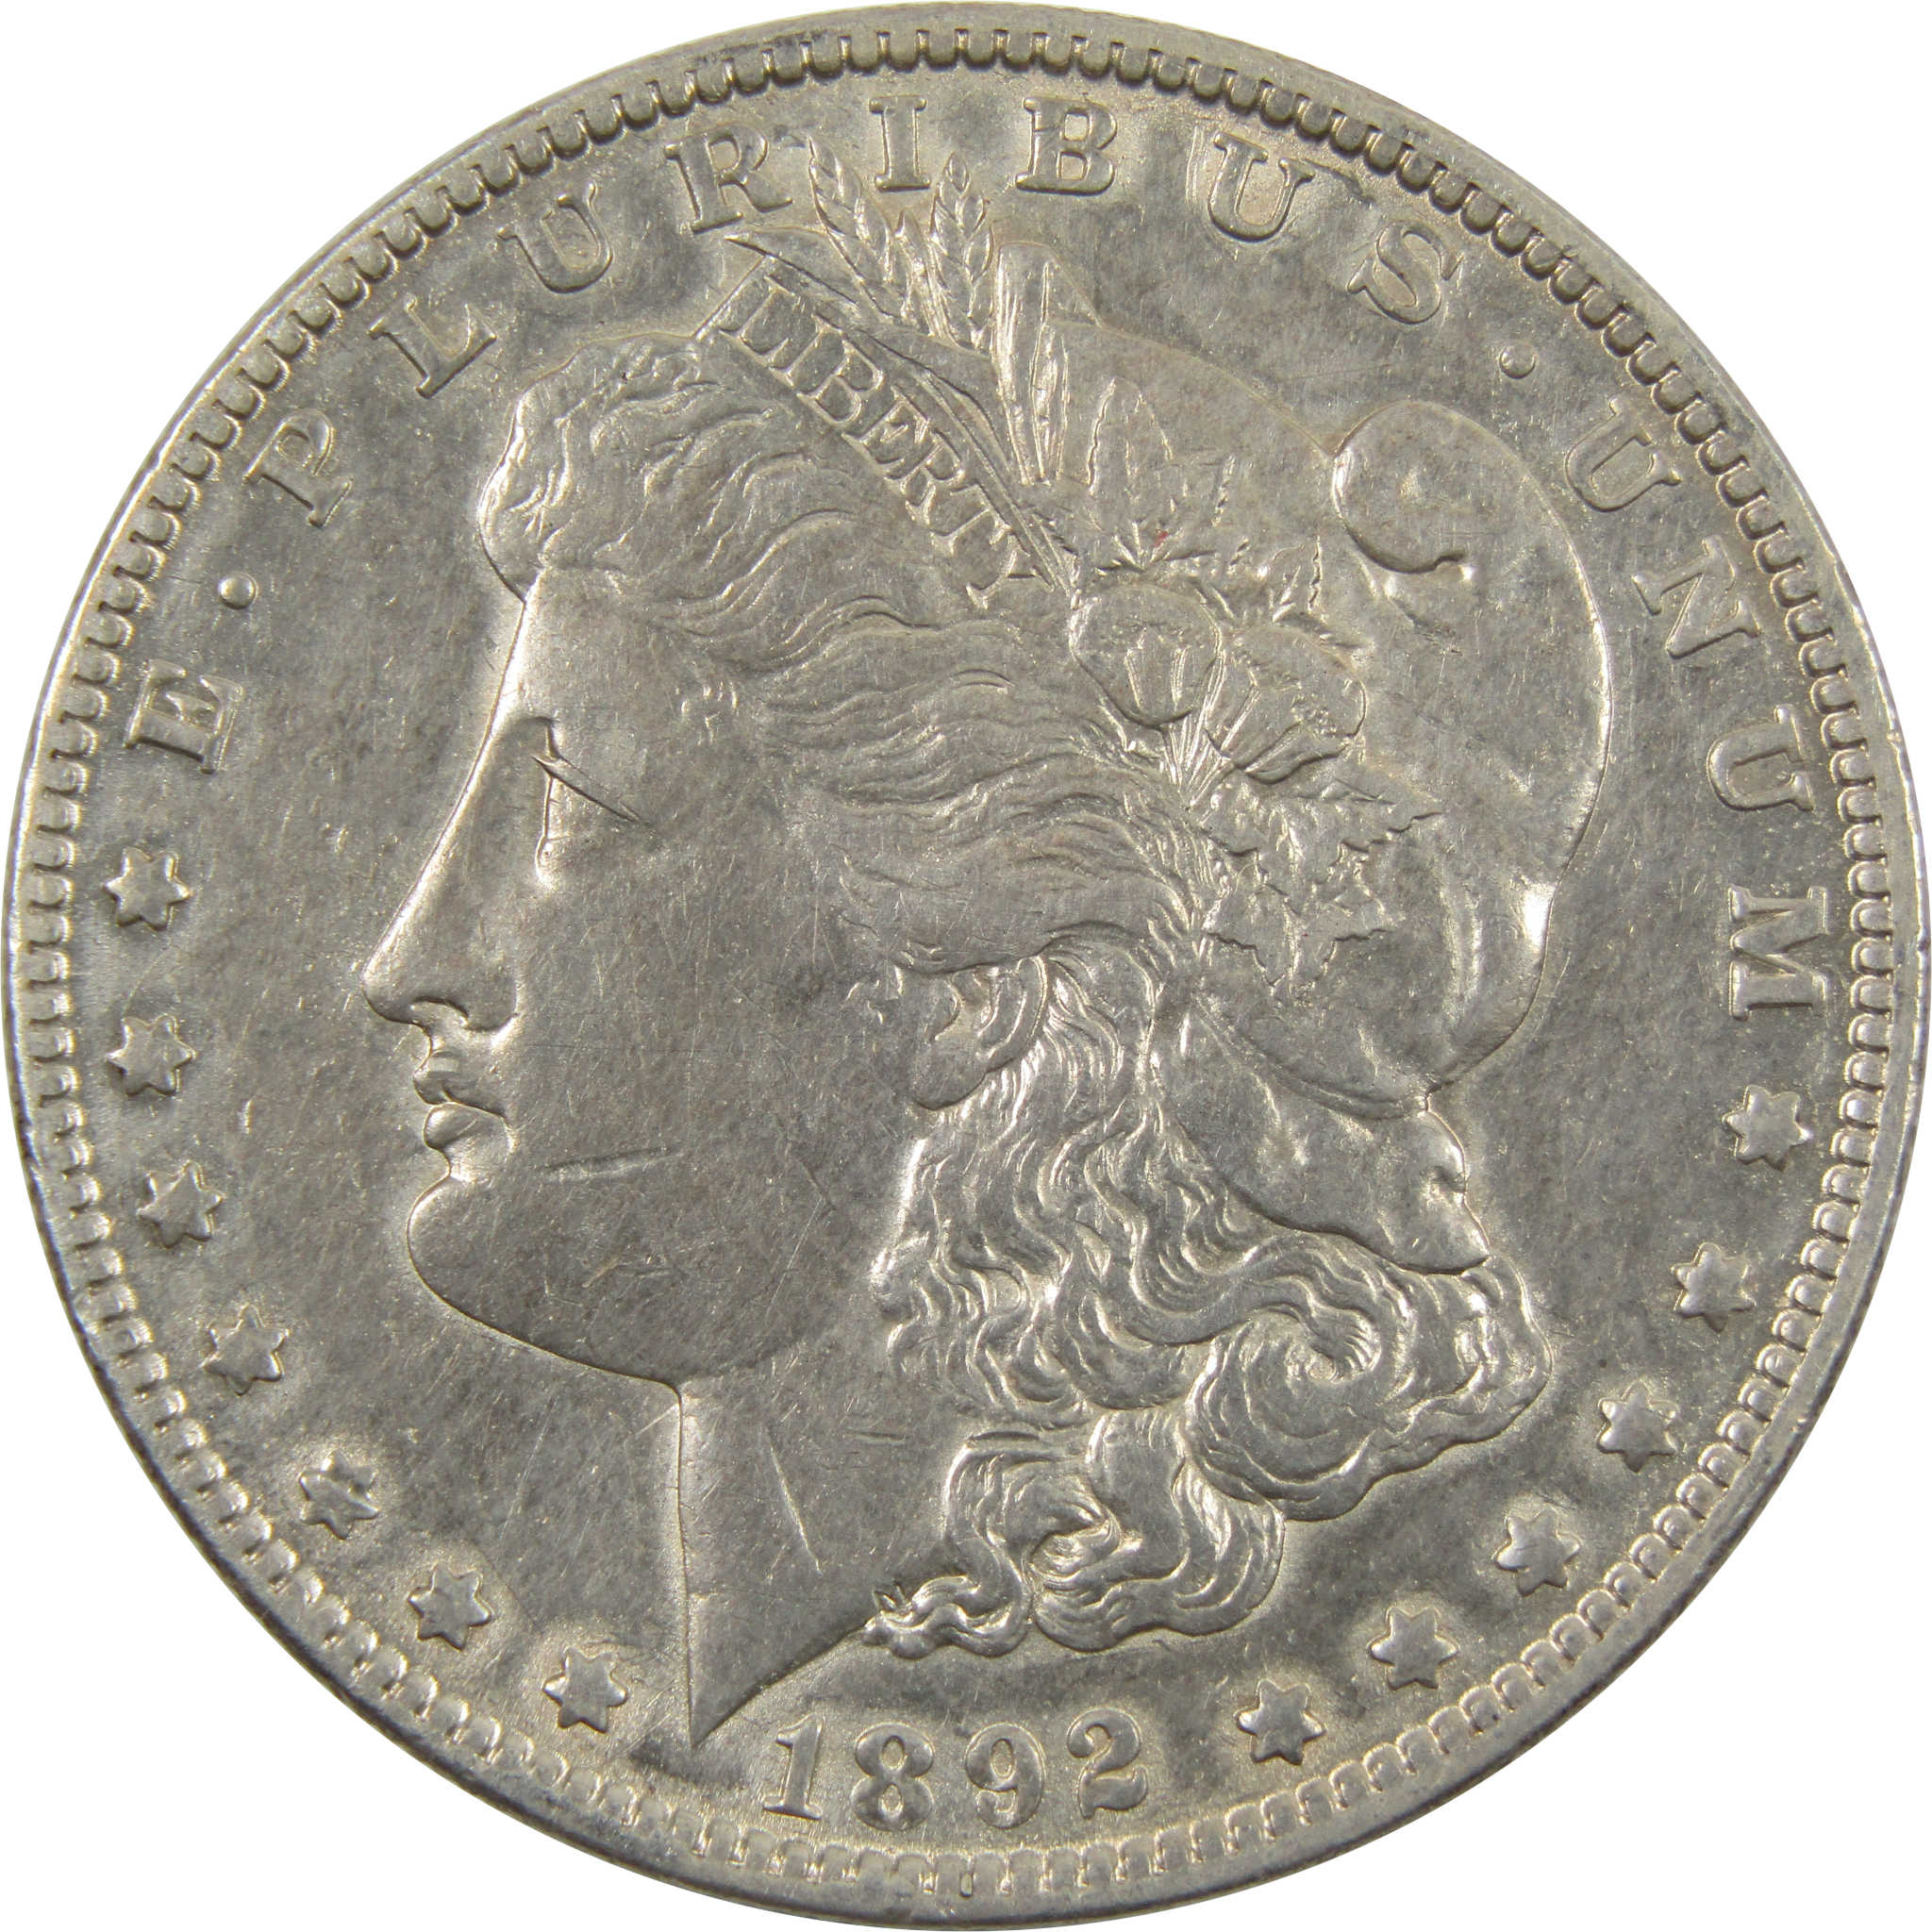 1892 O Morgan Dollar AU About Uncirculated Details Silver $1 SKU:I9629 - Morgan coin - Morgan silver dollar - Morgan silver dollar for sale - Profile Coins &amp; Collectibles